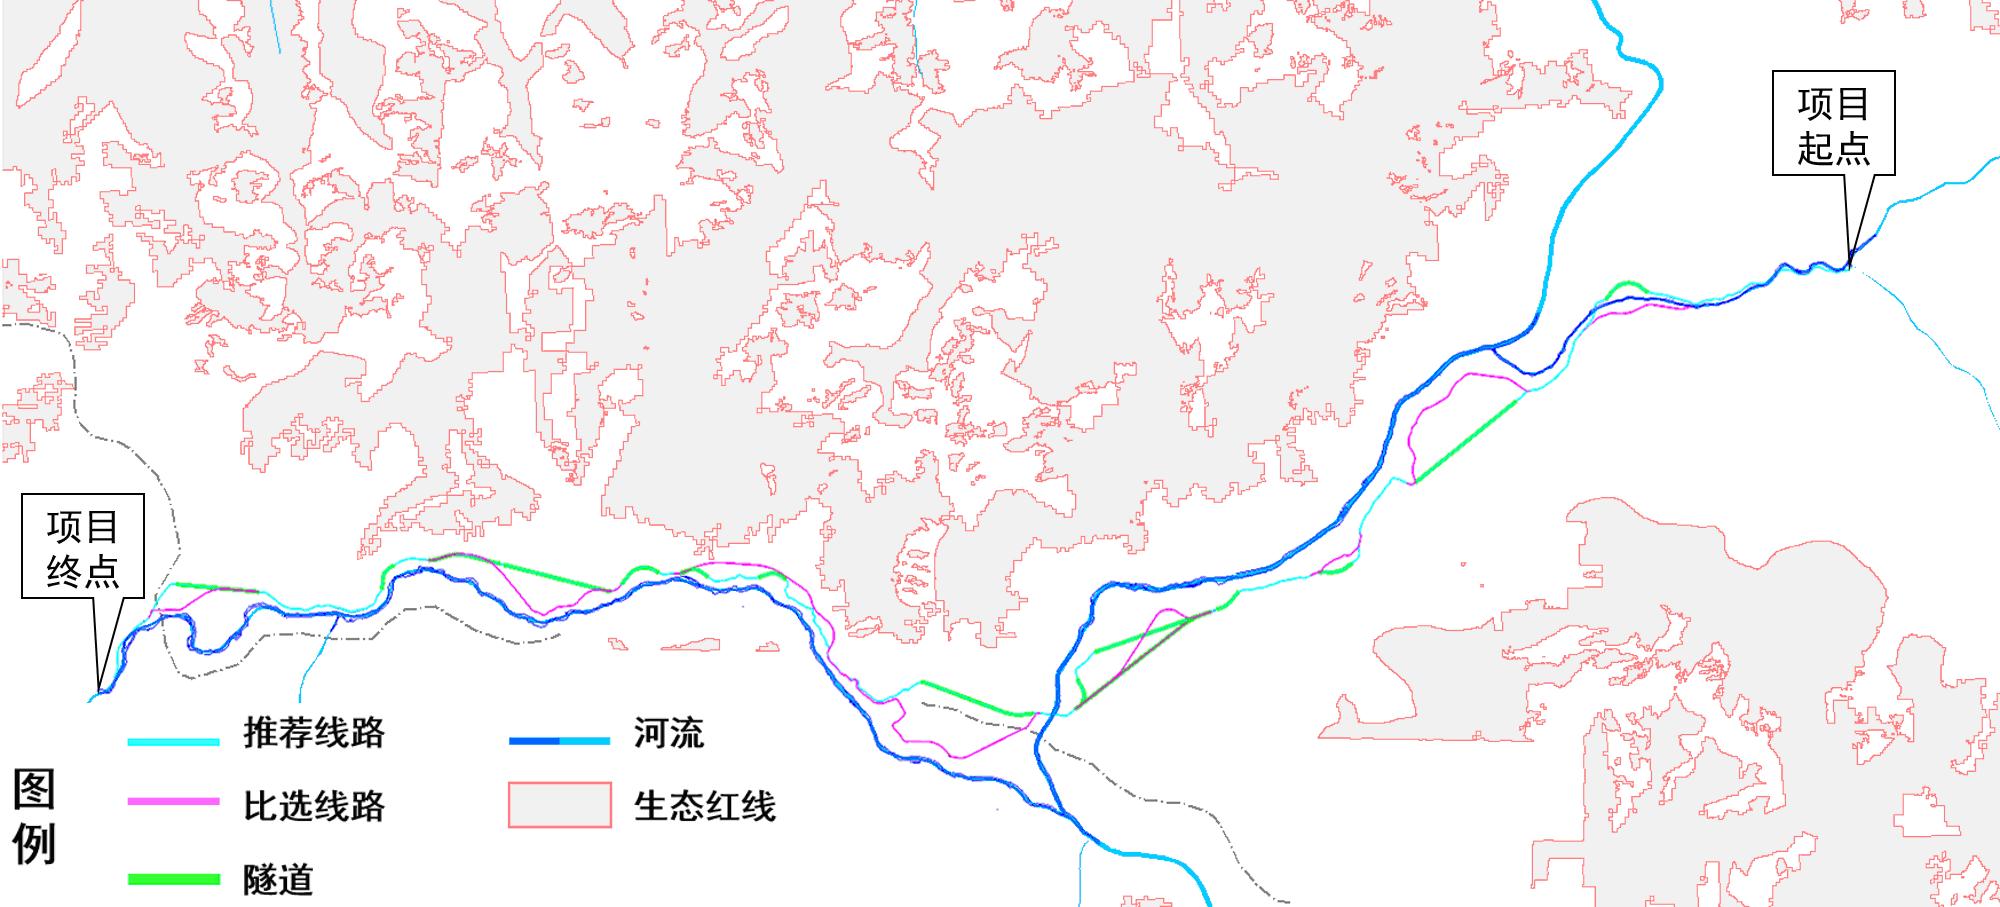 File:G317 route.JPG